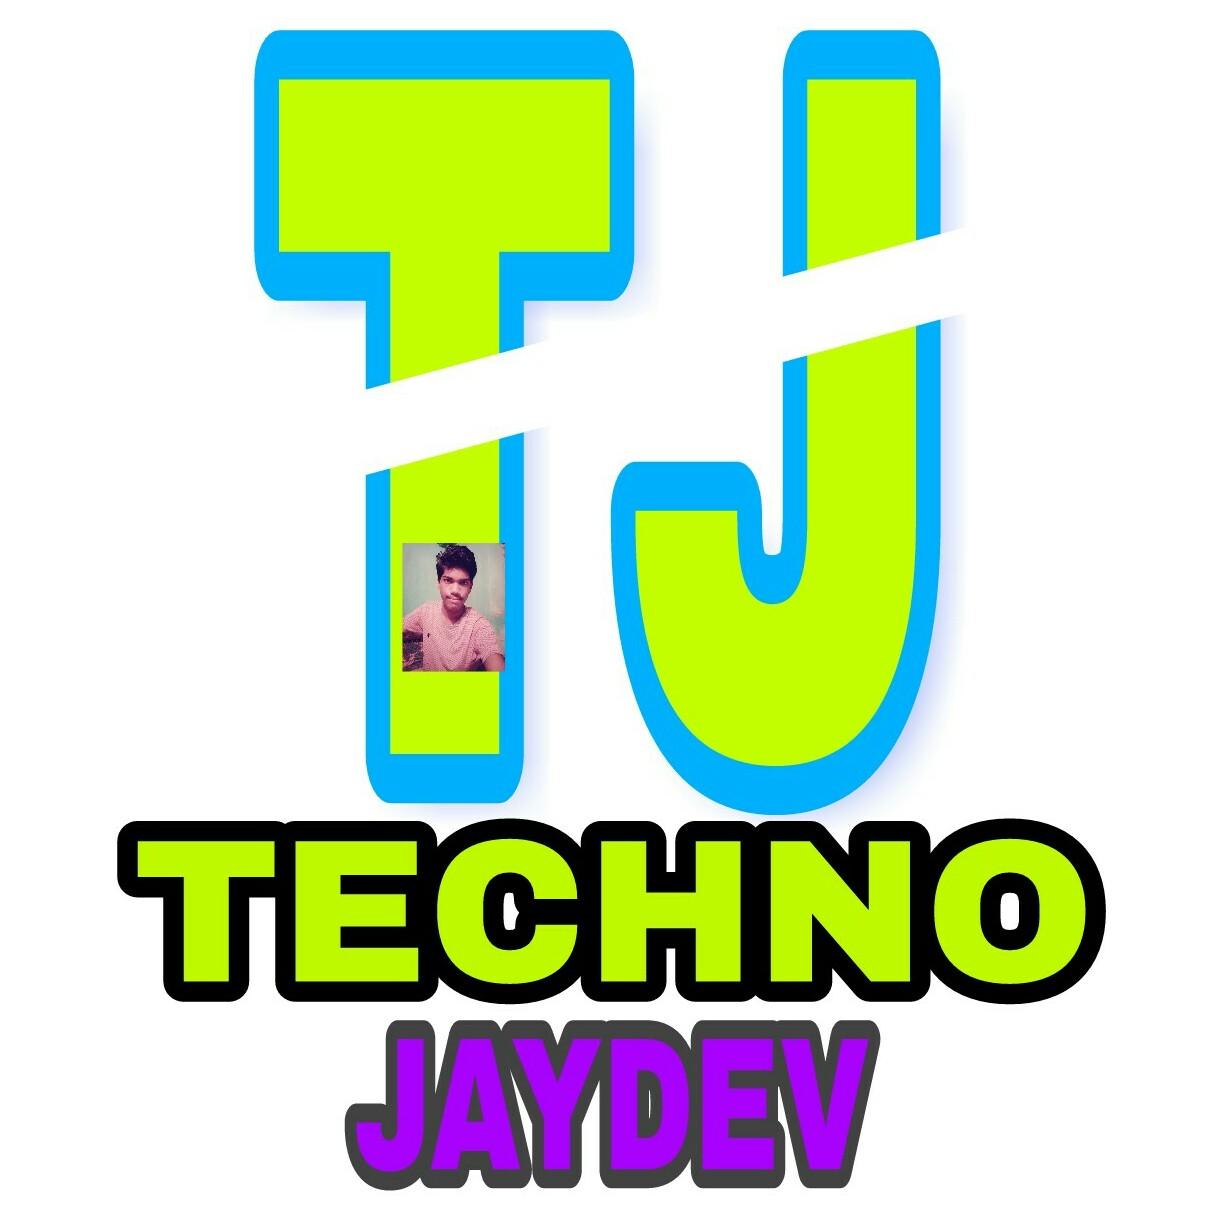 Techno jaydev